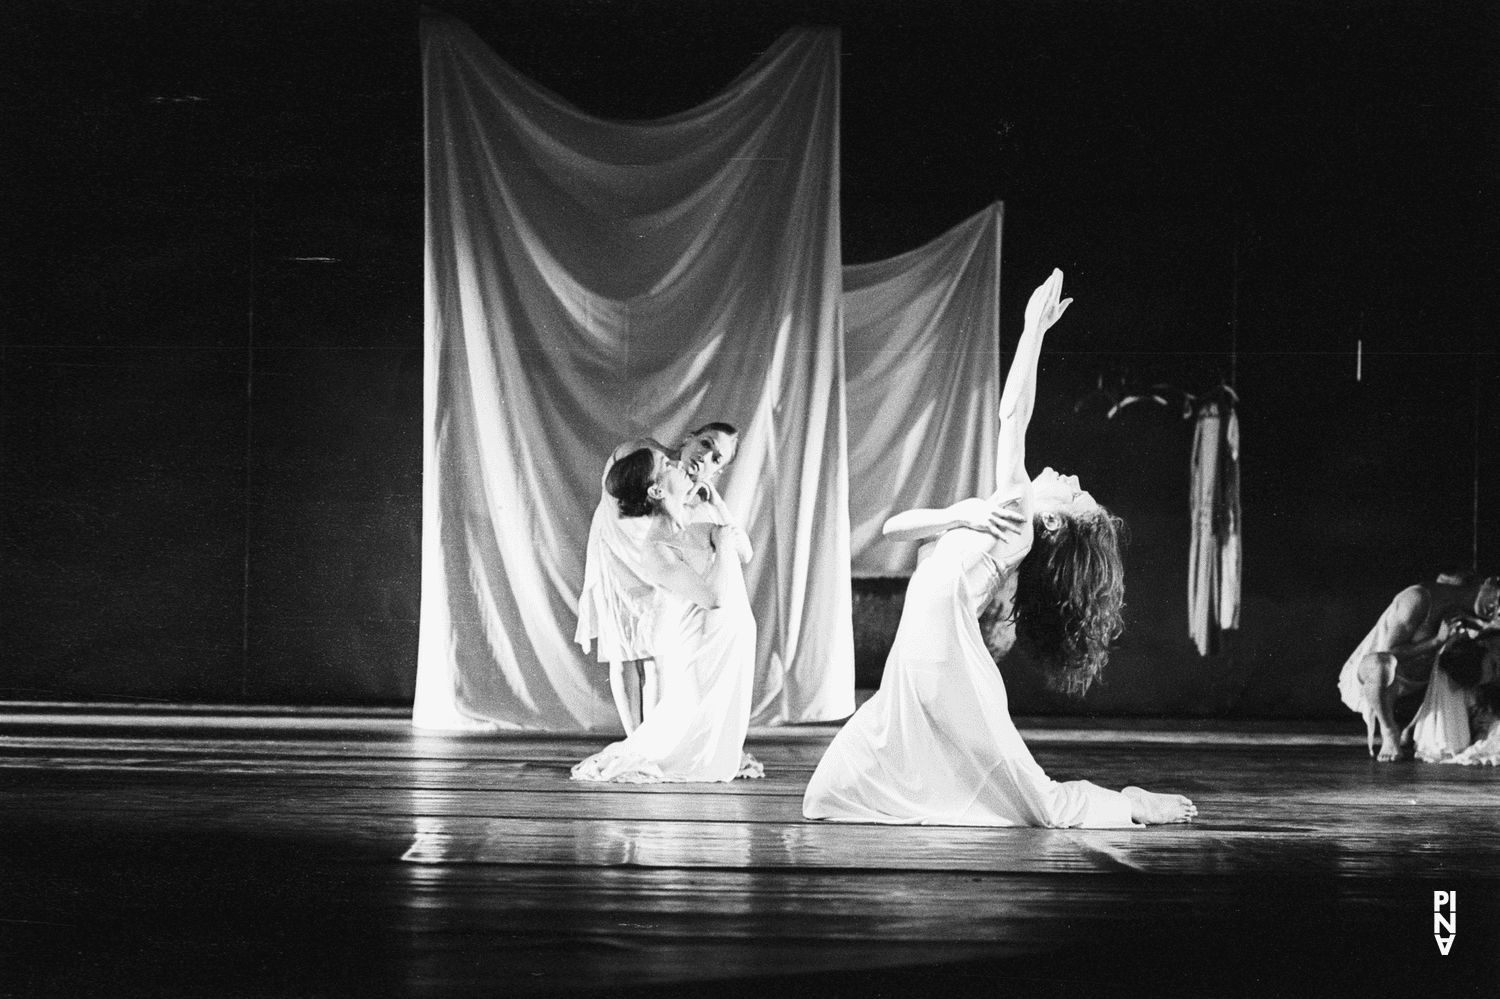 Malou Airaudo and Vivienne Newport in “Iphigenie auf Tauris” by Pina Bausch at Opernhaus Wuppertal, season 1973/74